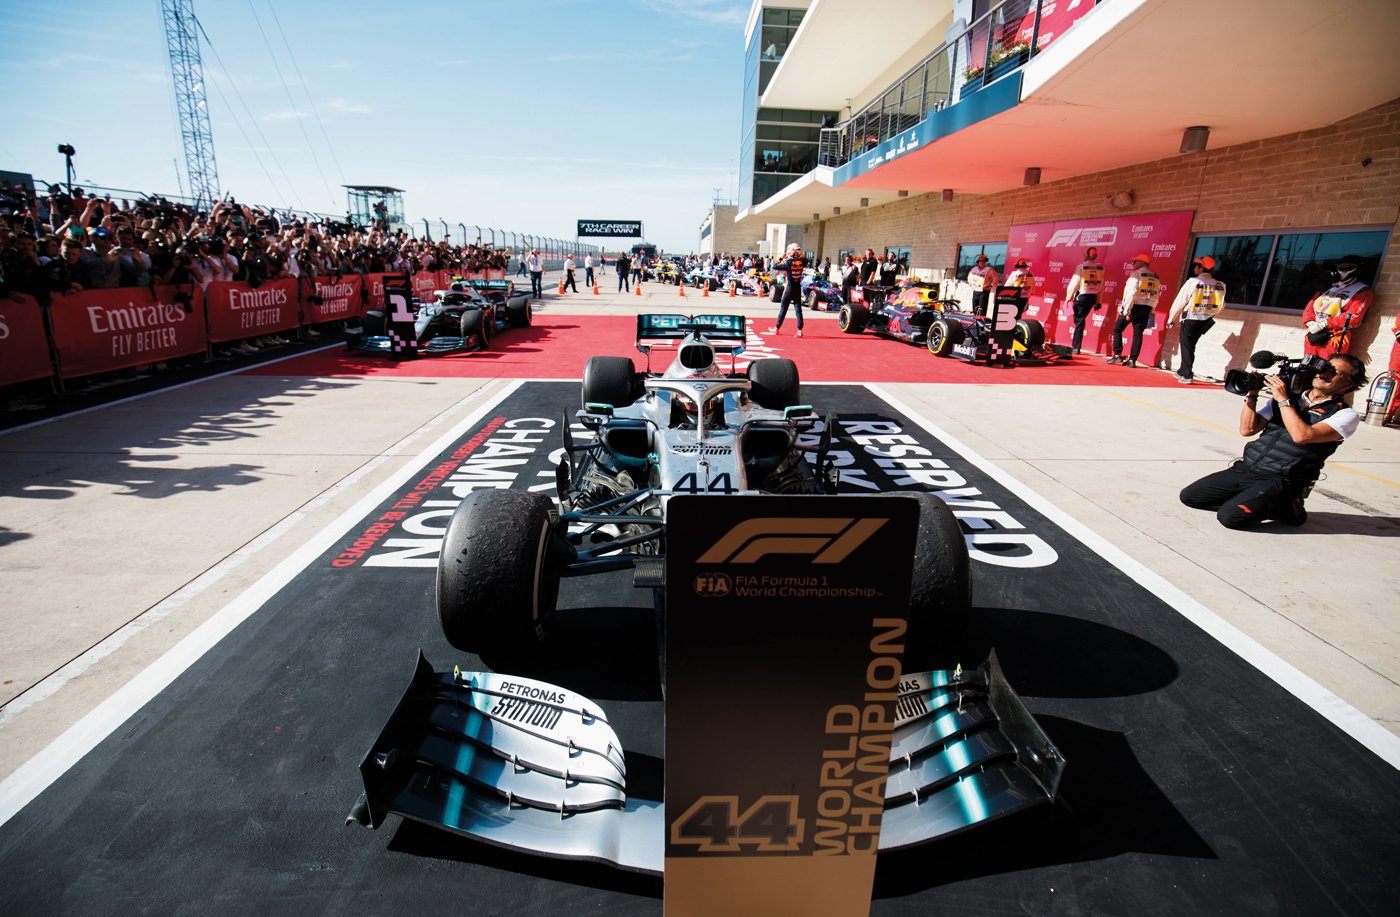 Spark 1:43 Hamilton 2019 American GP Mercedes diecast model car review